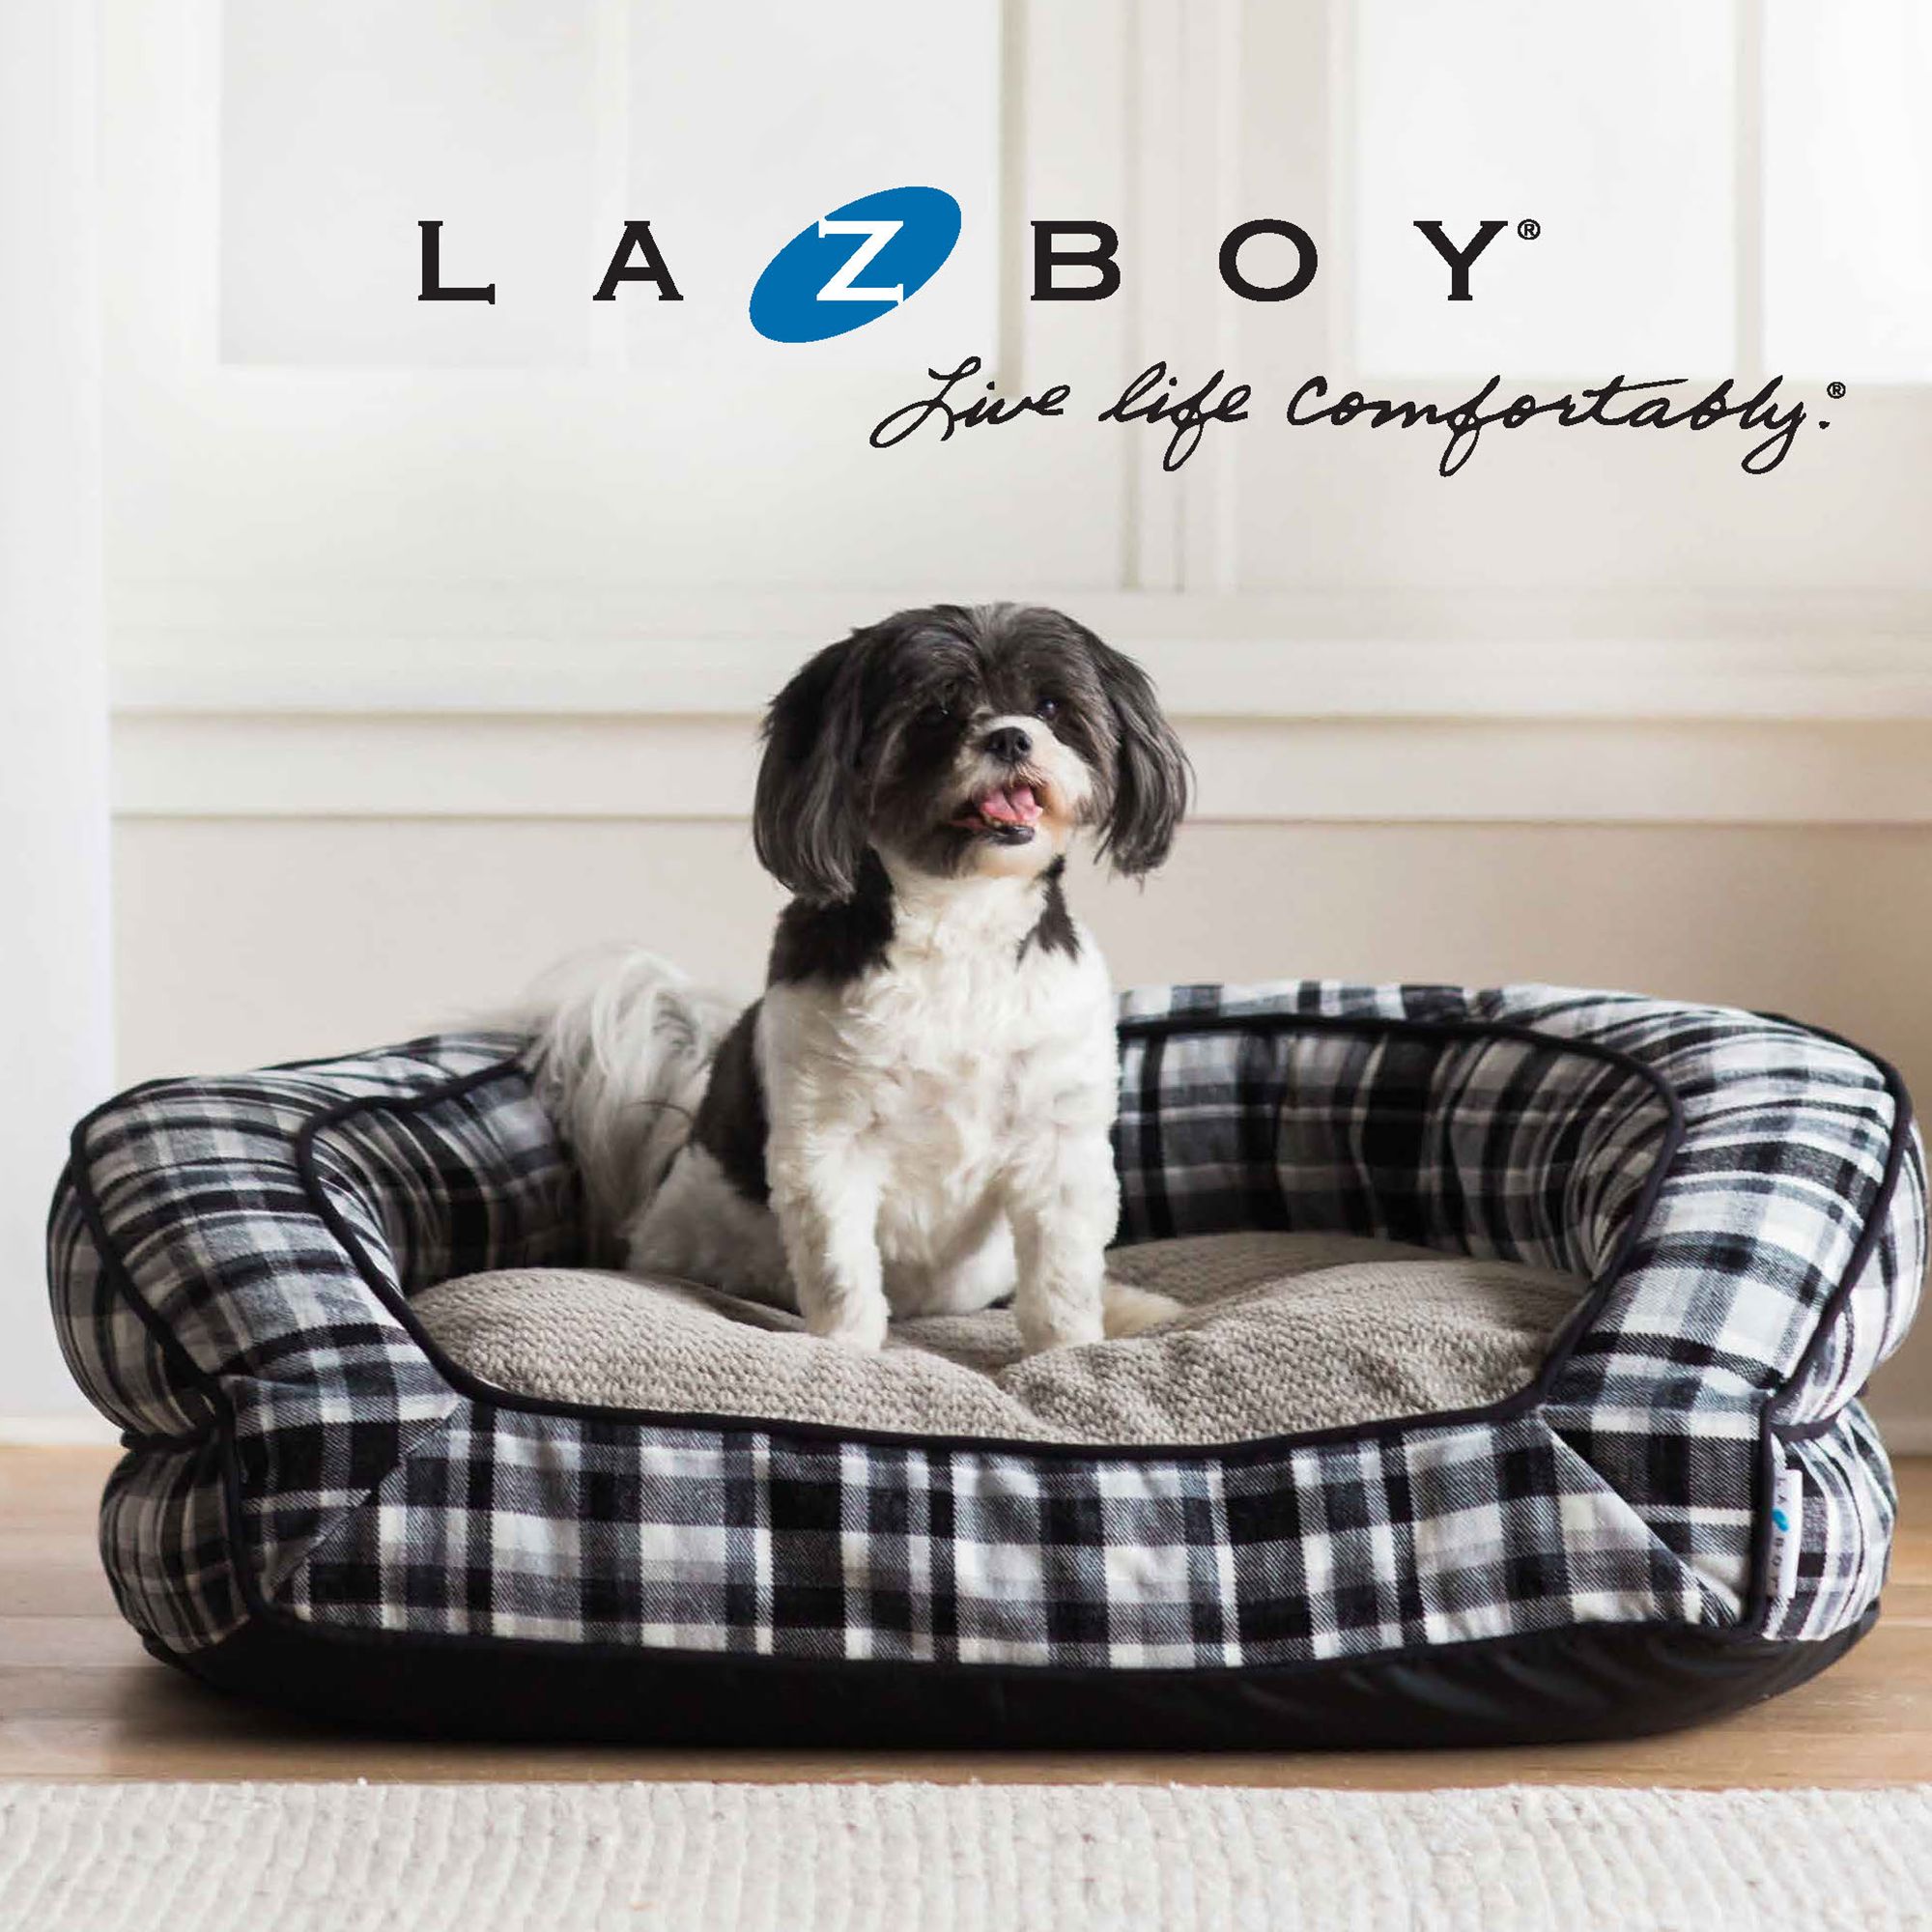 boy dog beds